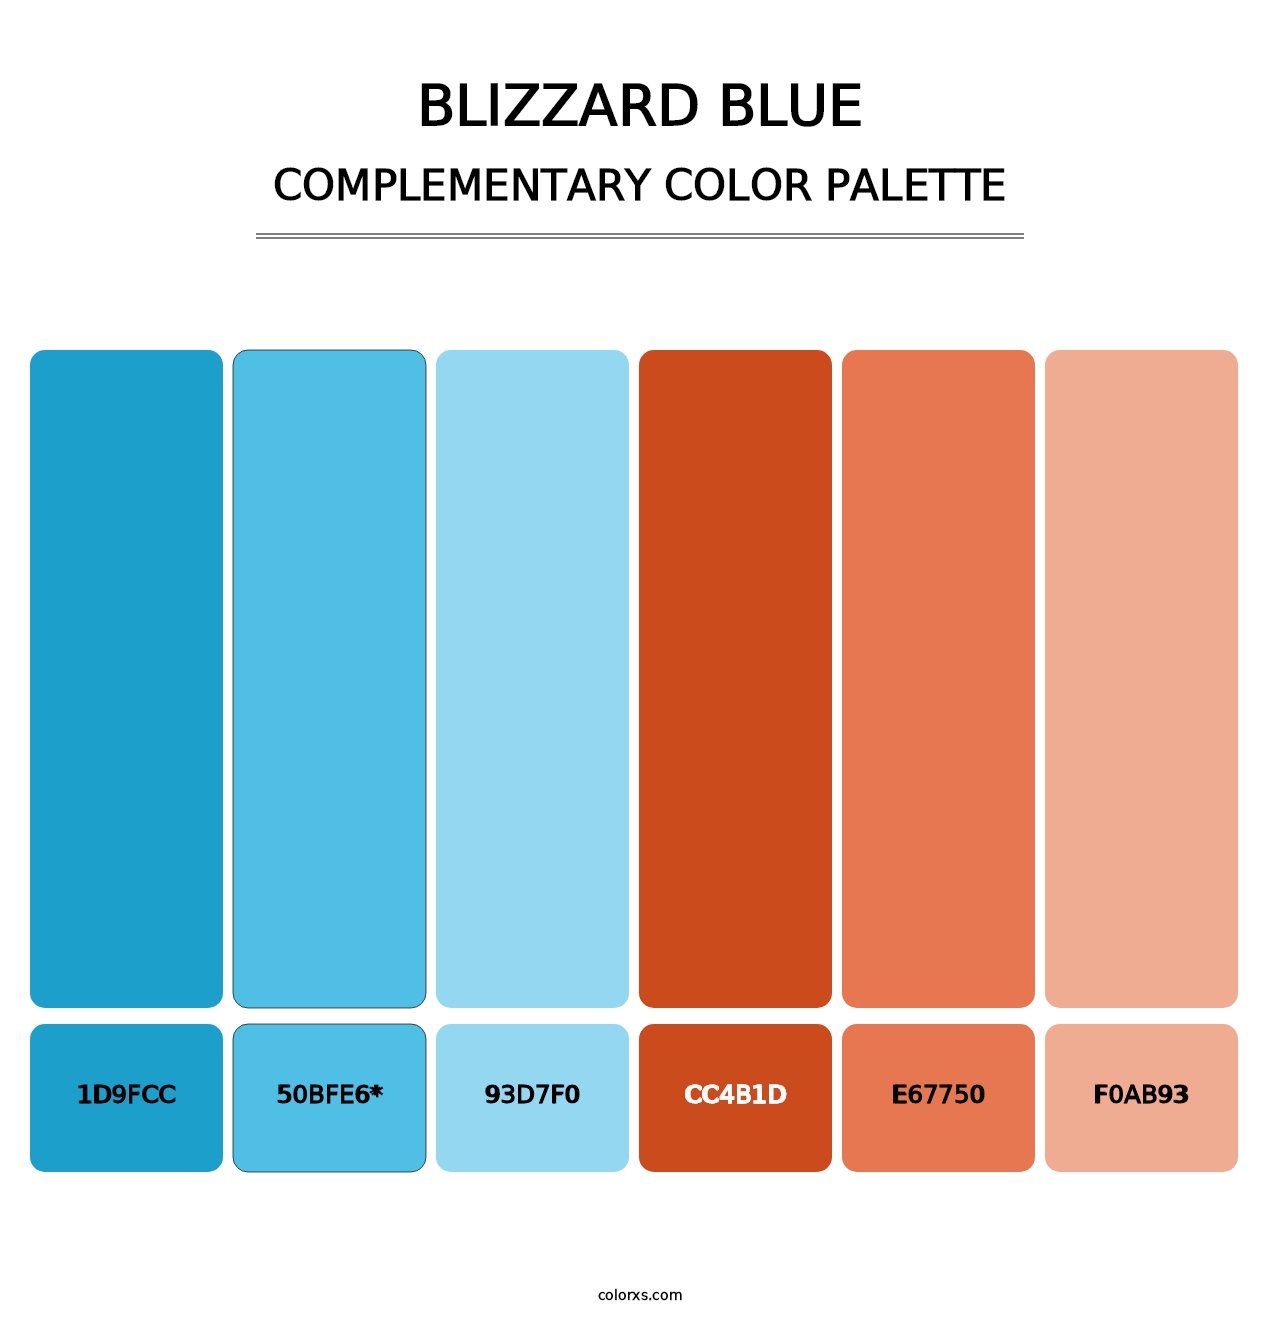 Blizzard Blue - Complementary Color Palette